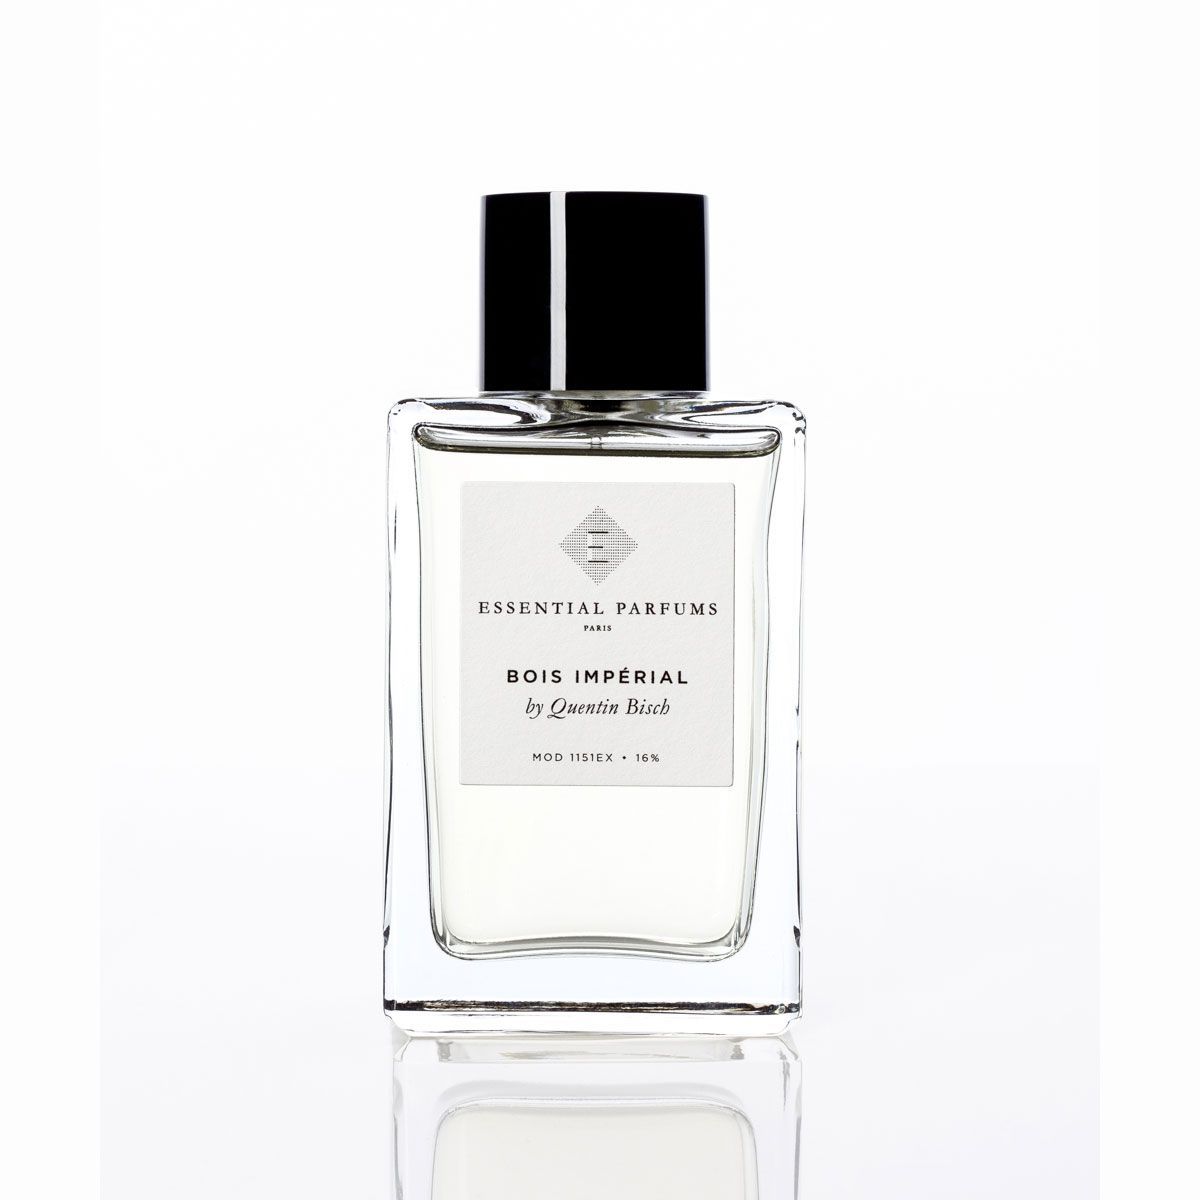 Essential parfums paris bergamote. Essential Parfums bois Imperial. Essential Parfums Bergamote. Духи Essential Parfums bois Imperial by Quentin bisch. Essential Parfums Vetiver.